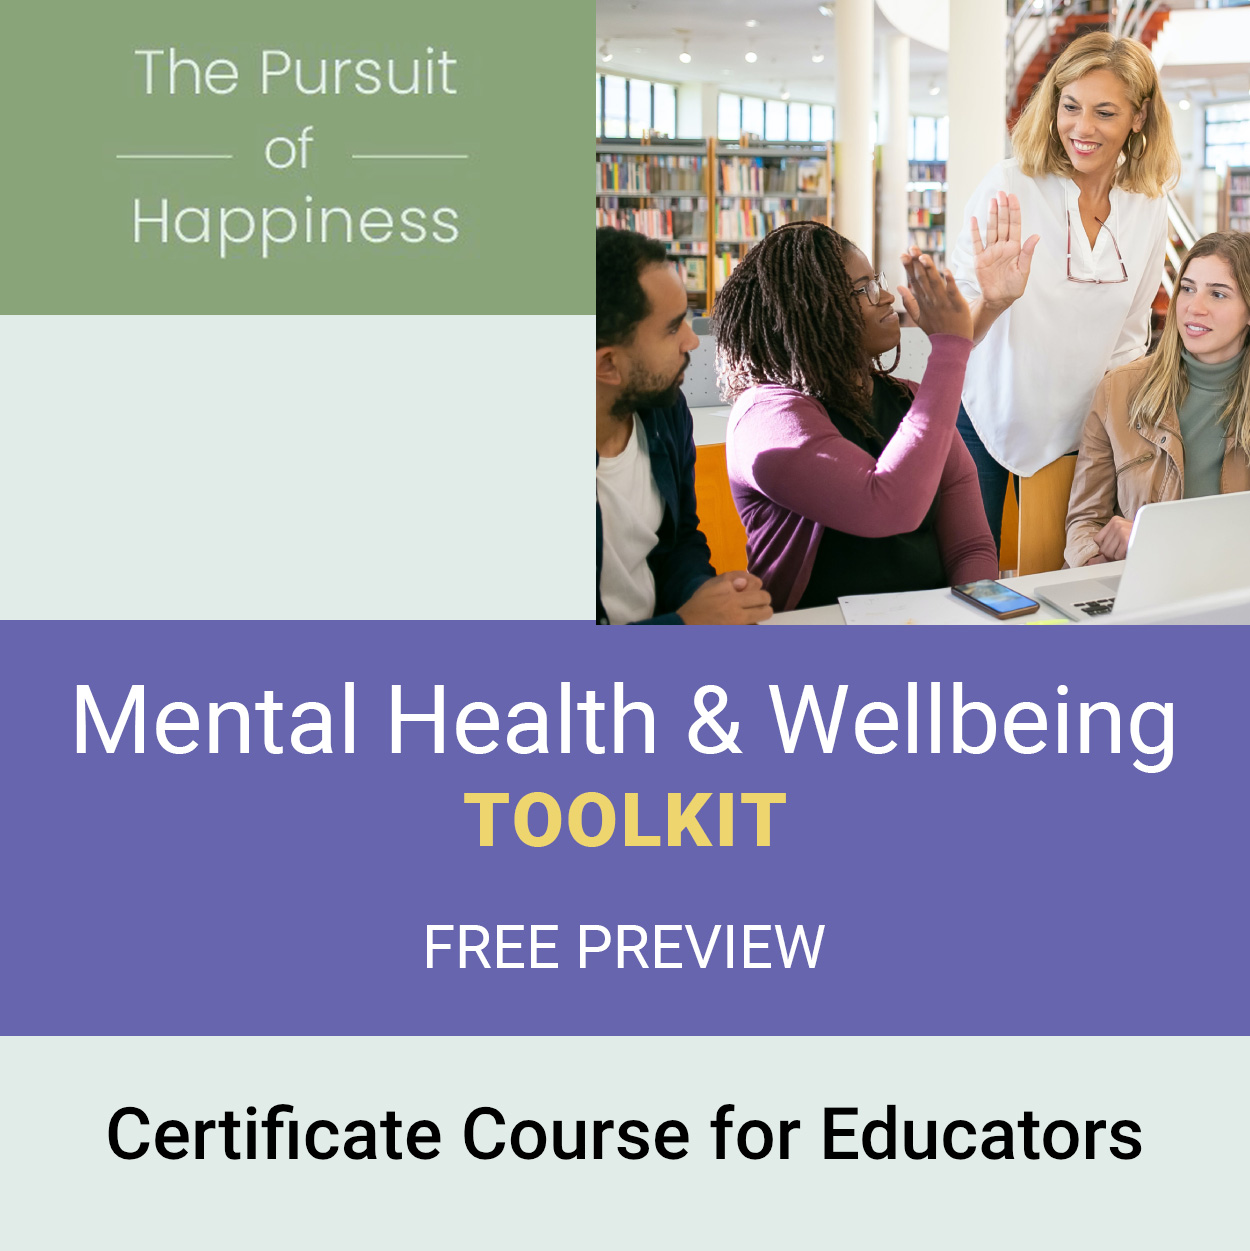 Mental Health Course